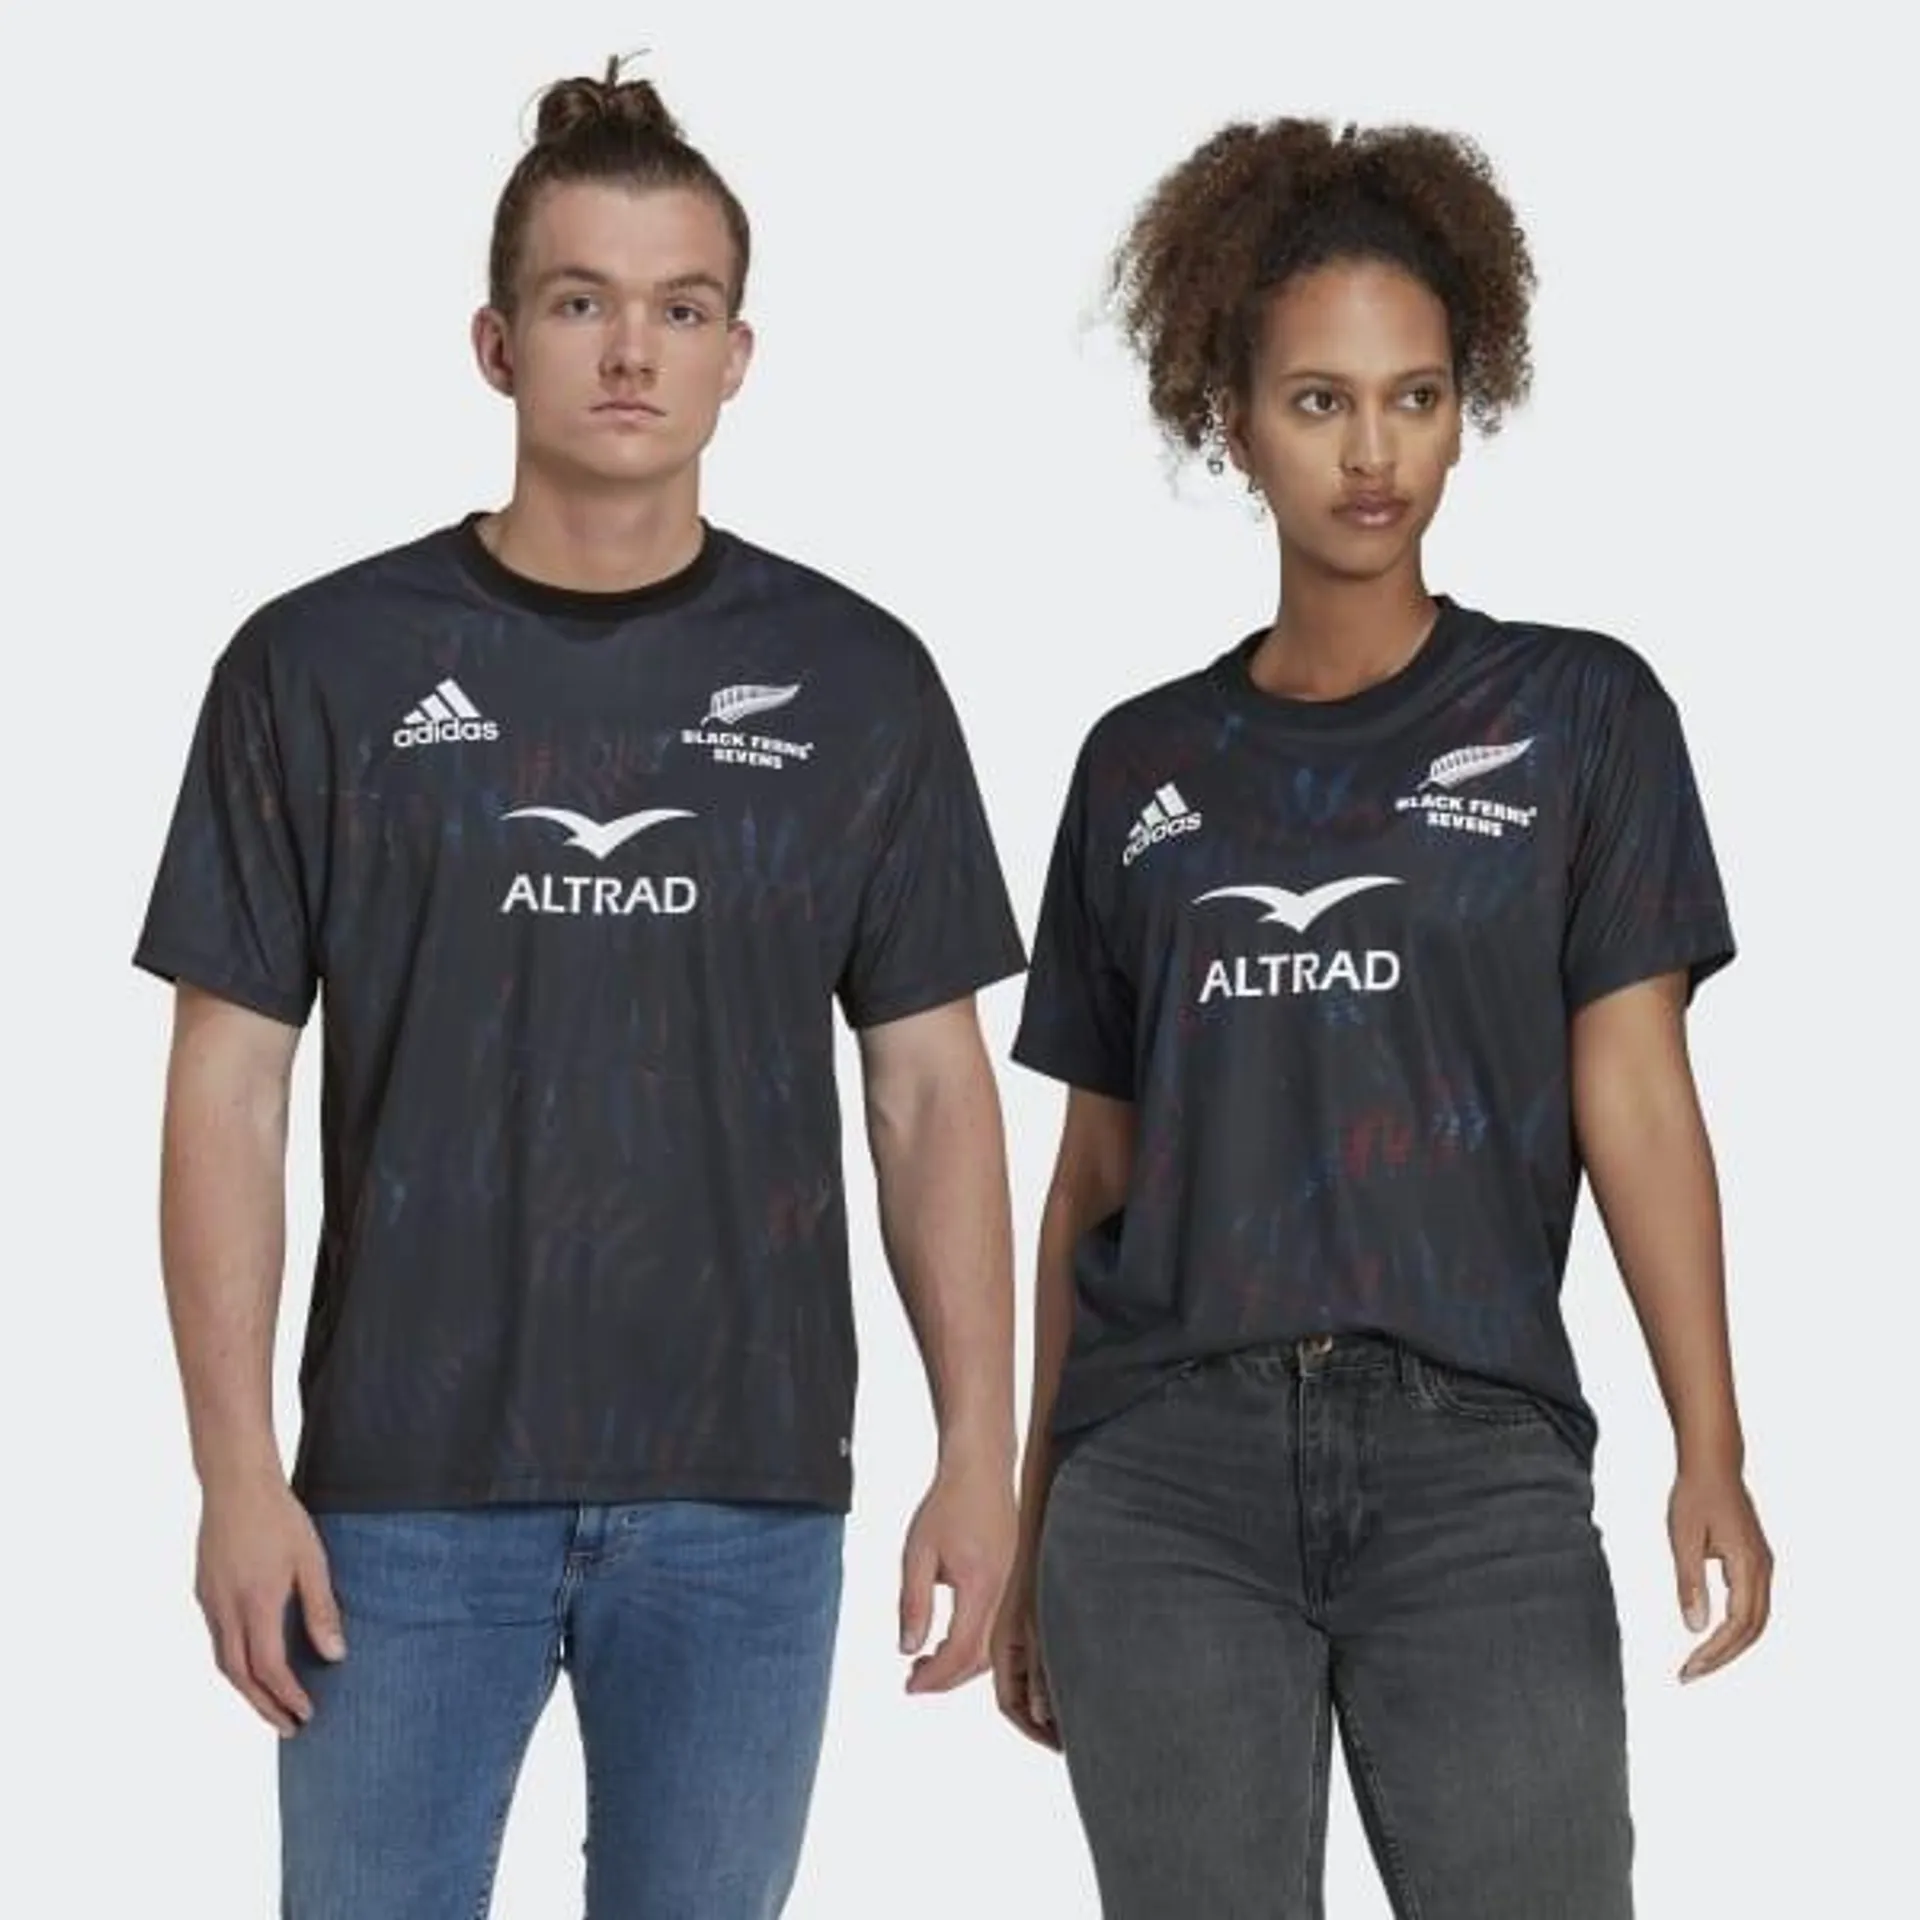 Black Ferns Sevens Thuis T-shirt (Uniseks)